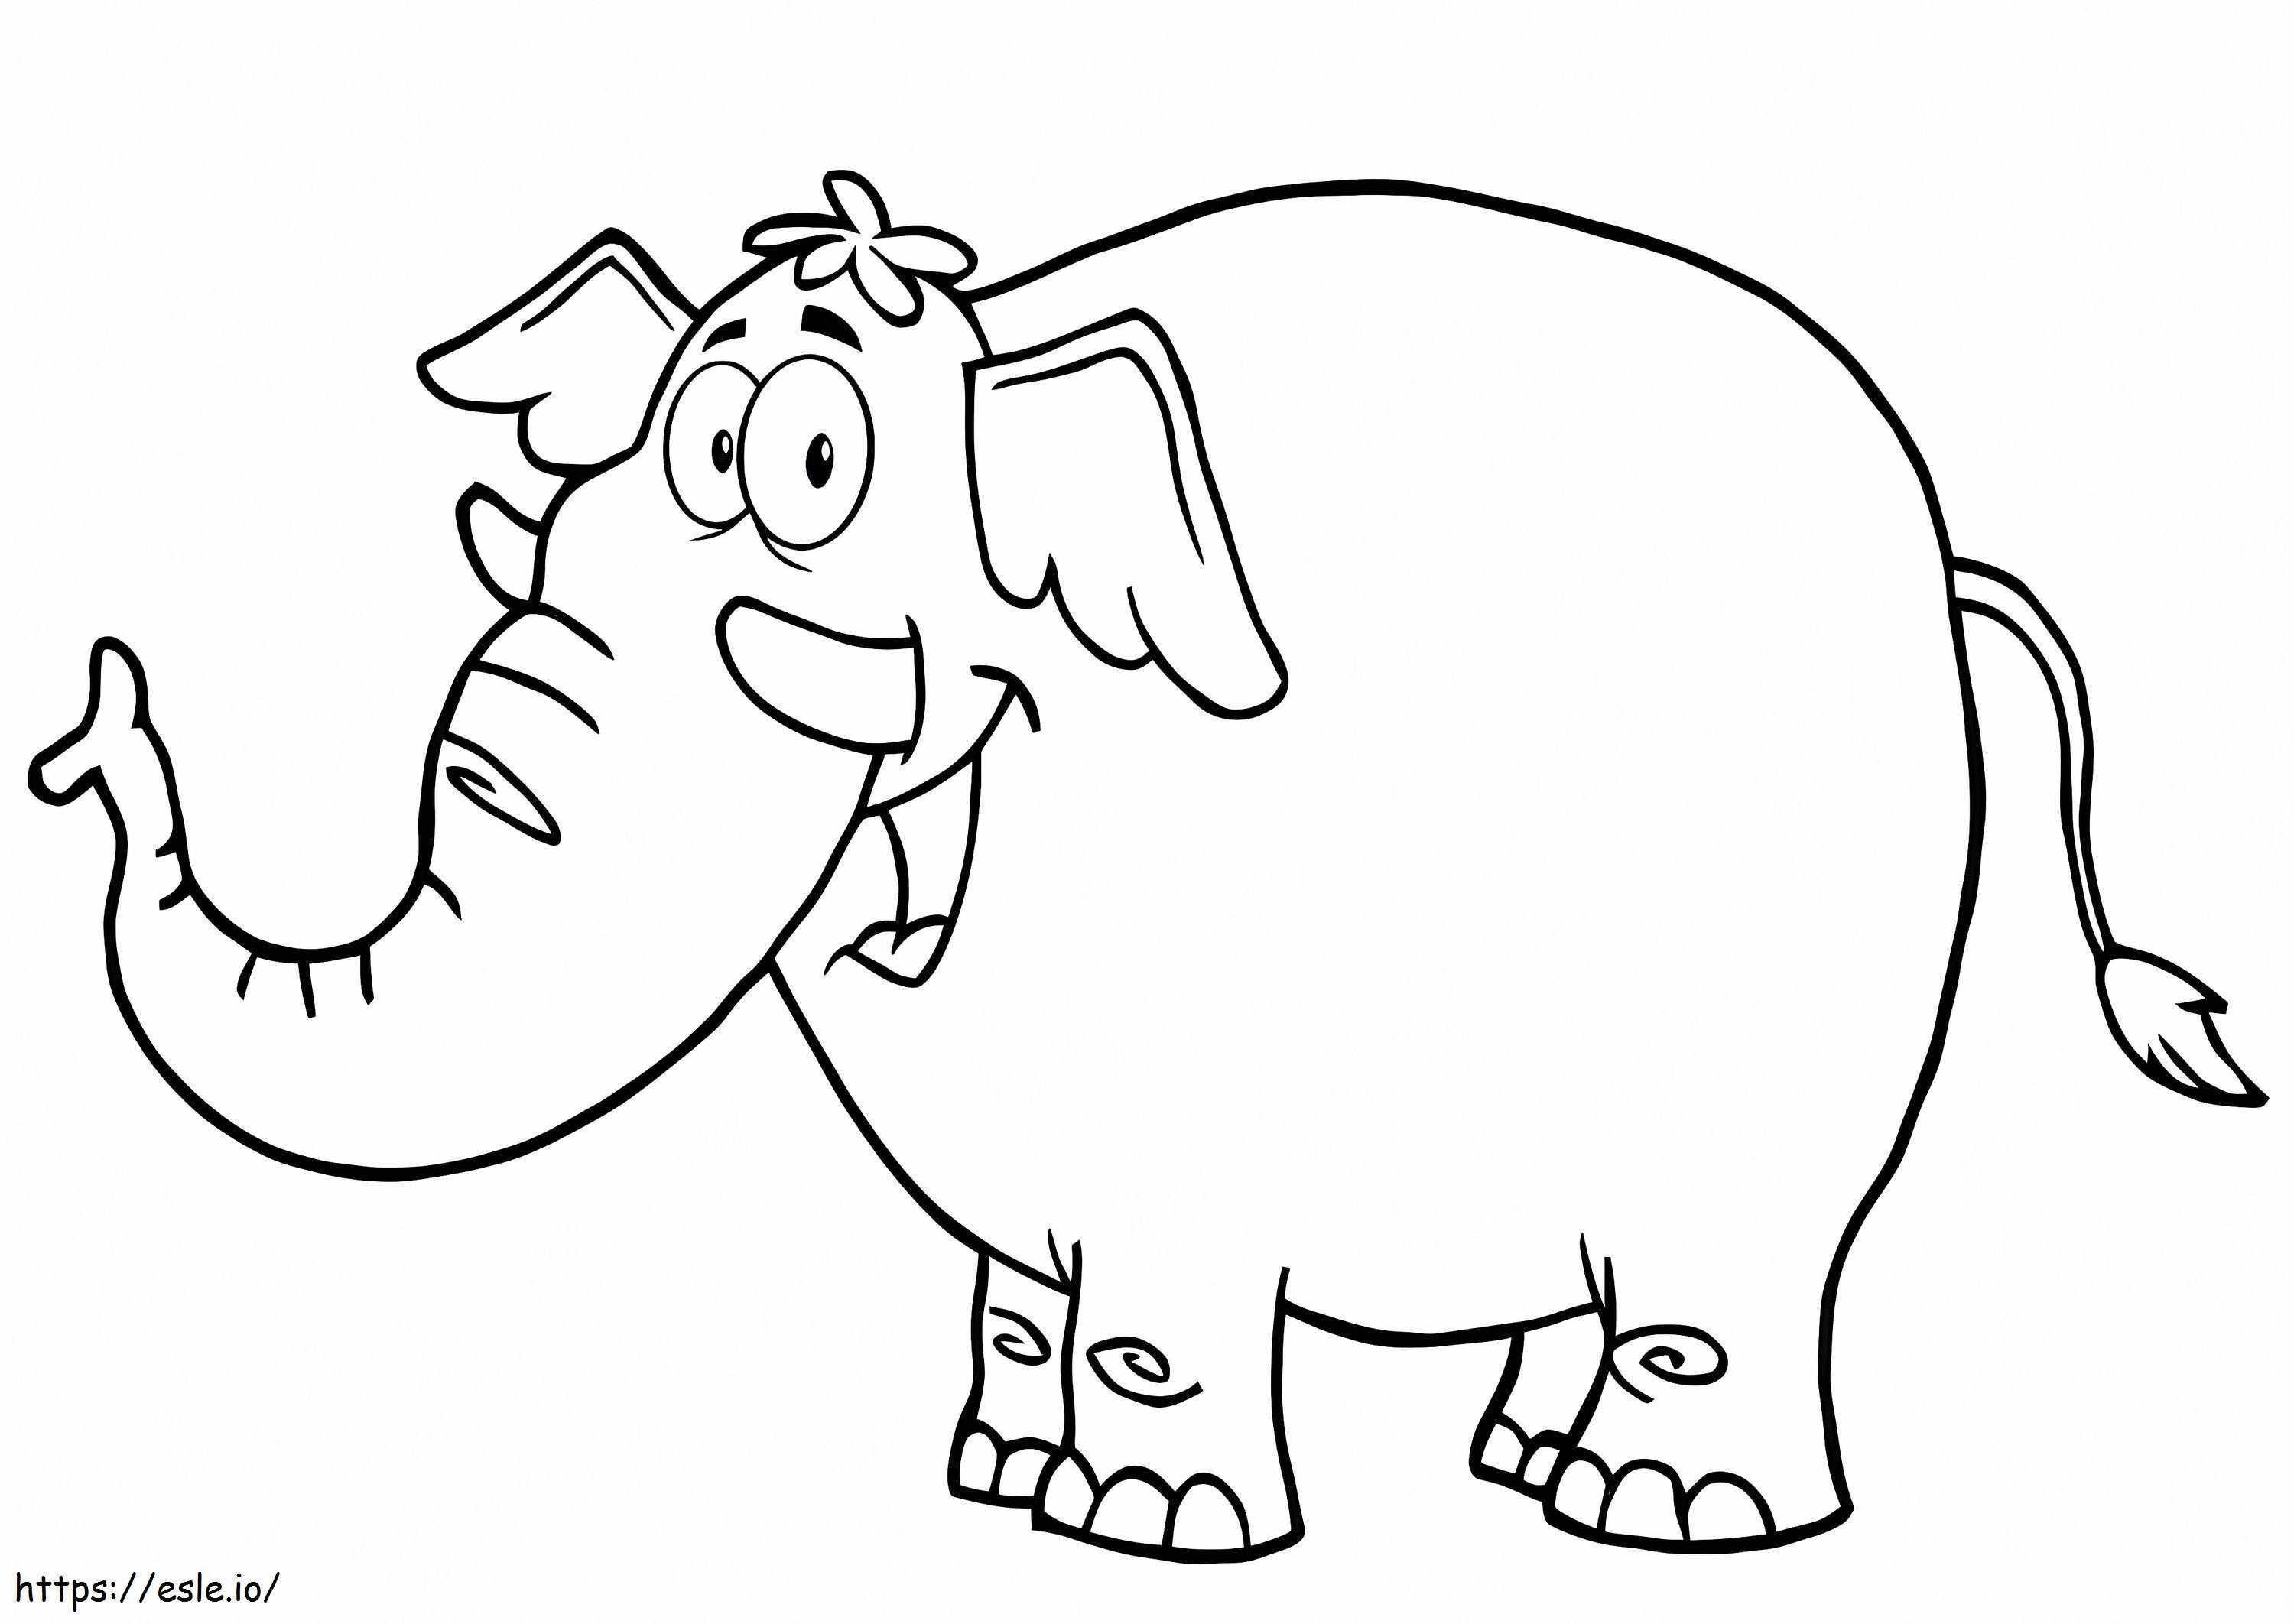 Gajah 3 Gambar Mewarnai